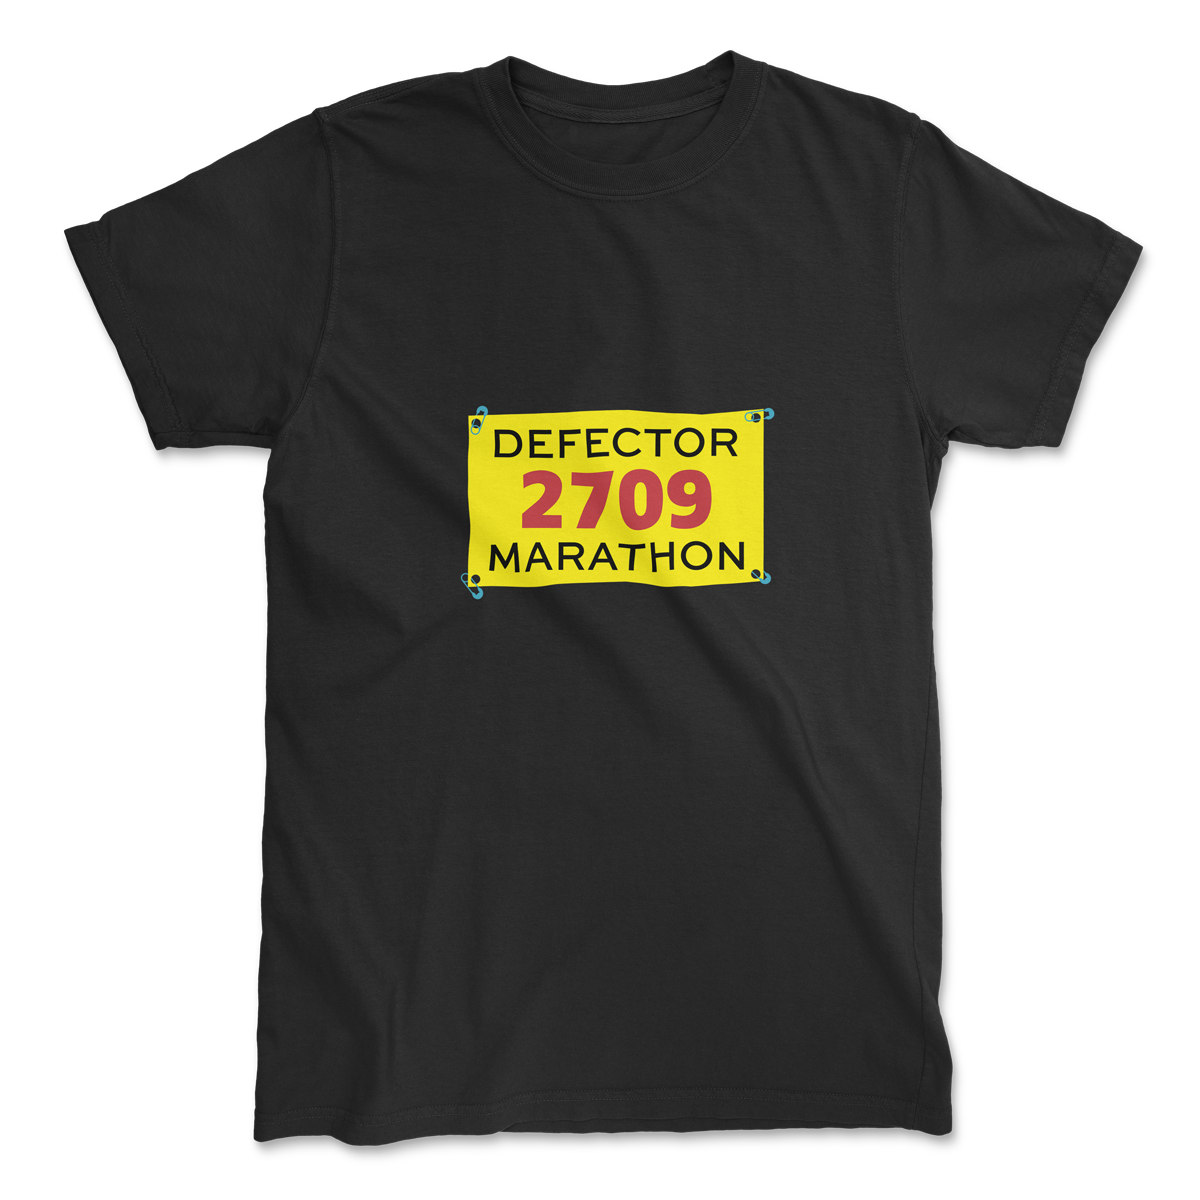 Black t-shirt with DEFECTOR 2709 MARATHON bib printed on